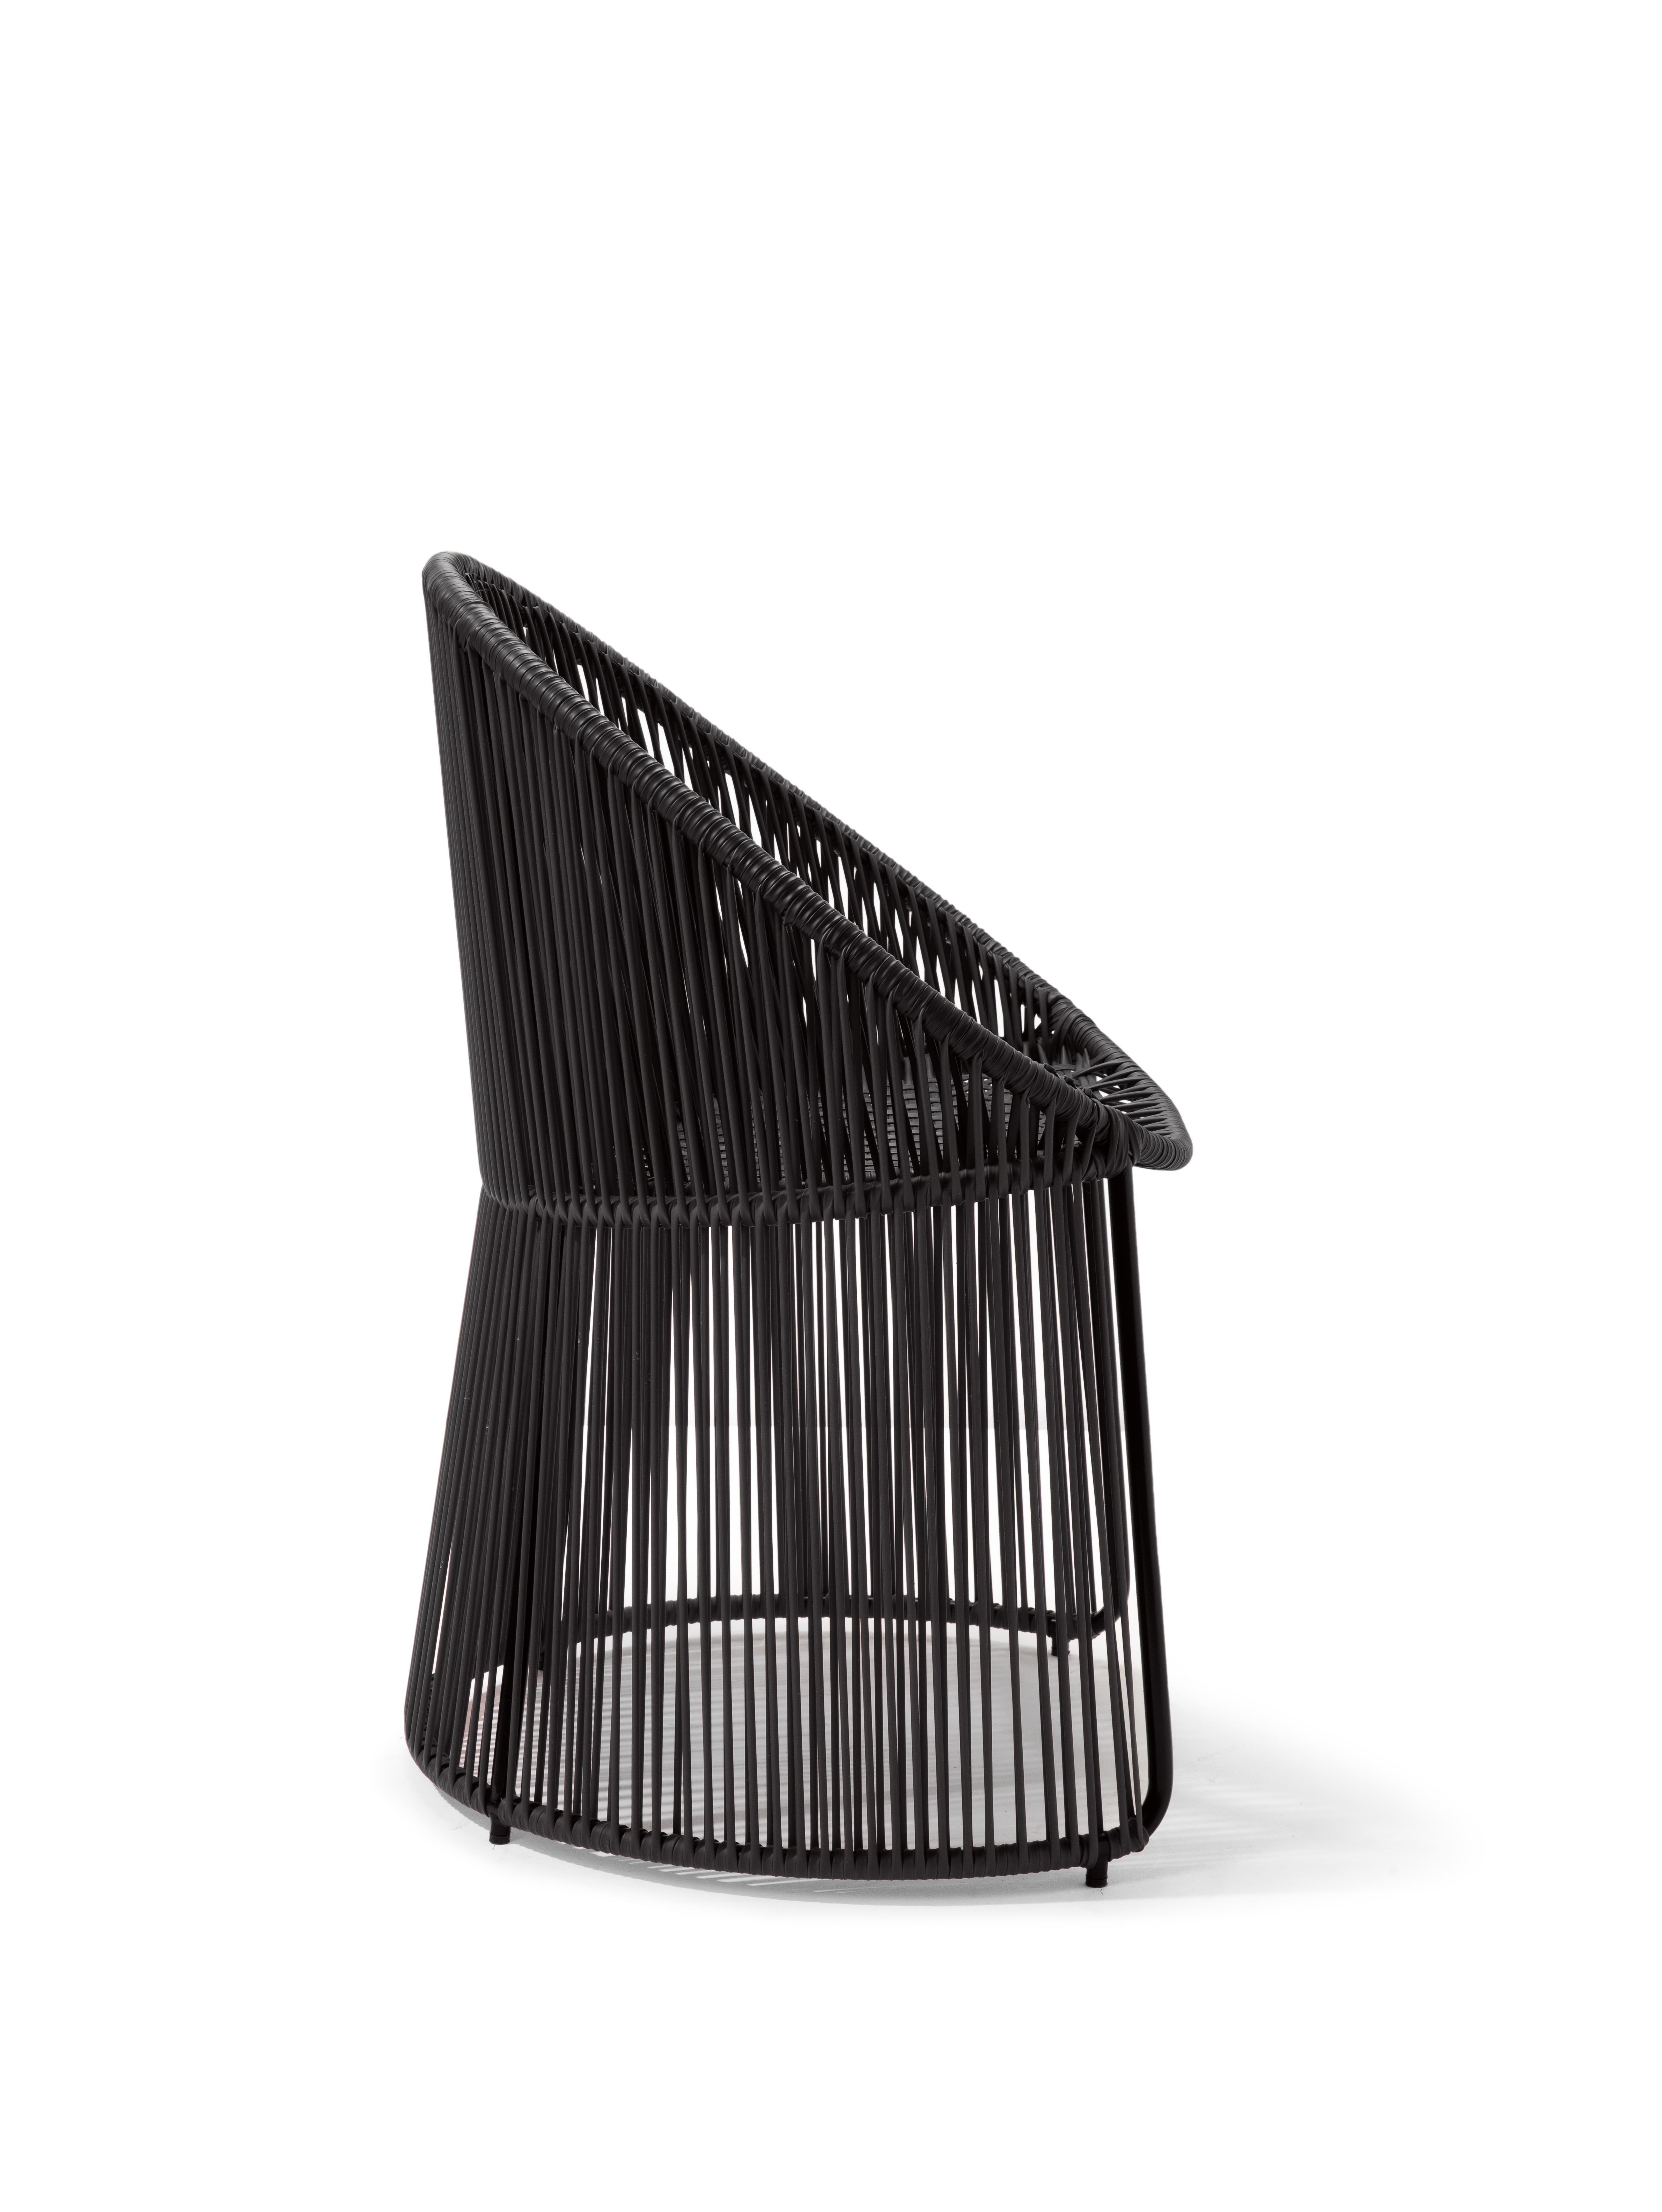 Modern Black Cartagenas Dining Chair by Sebastian Herkner For Sale